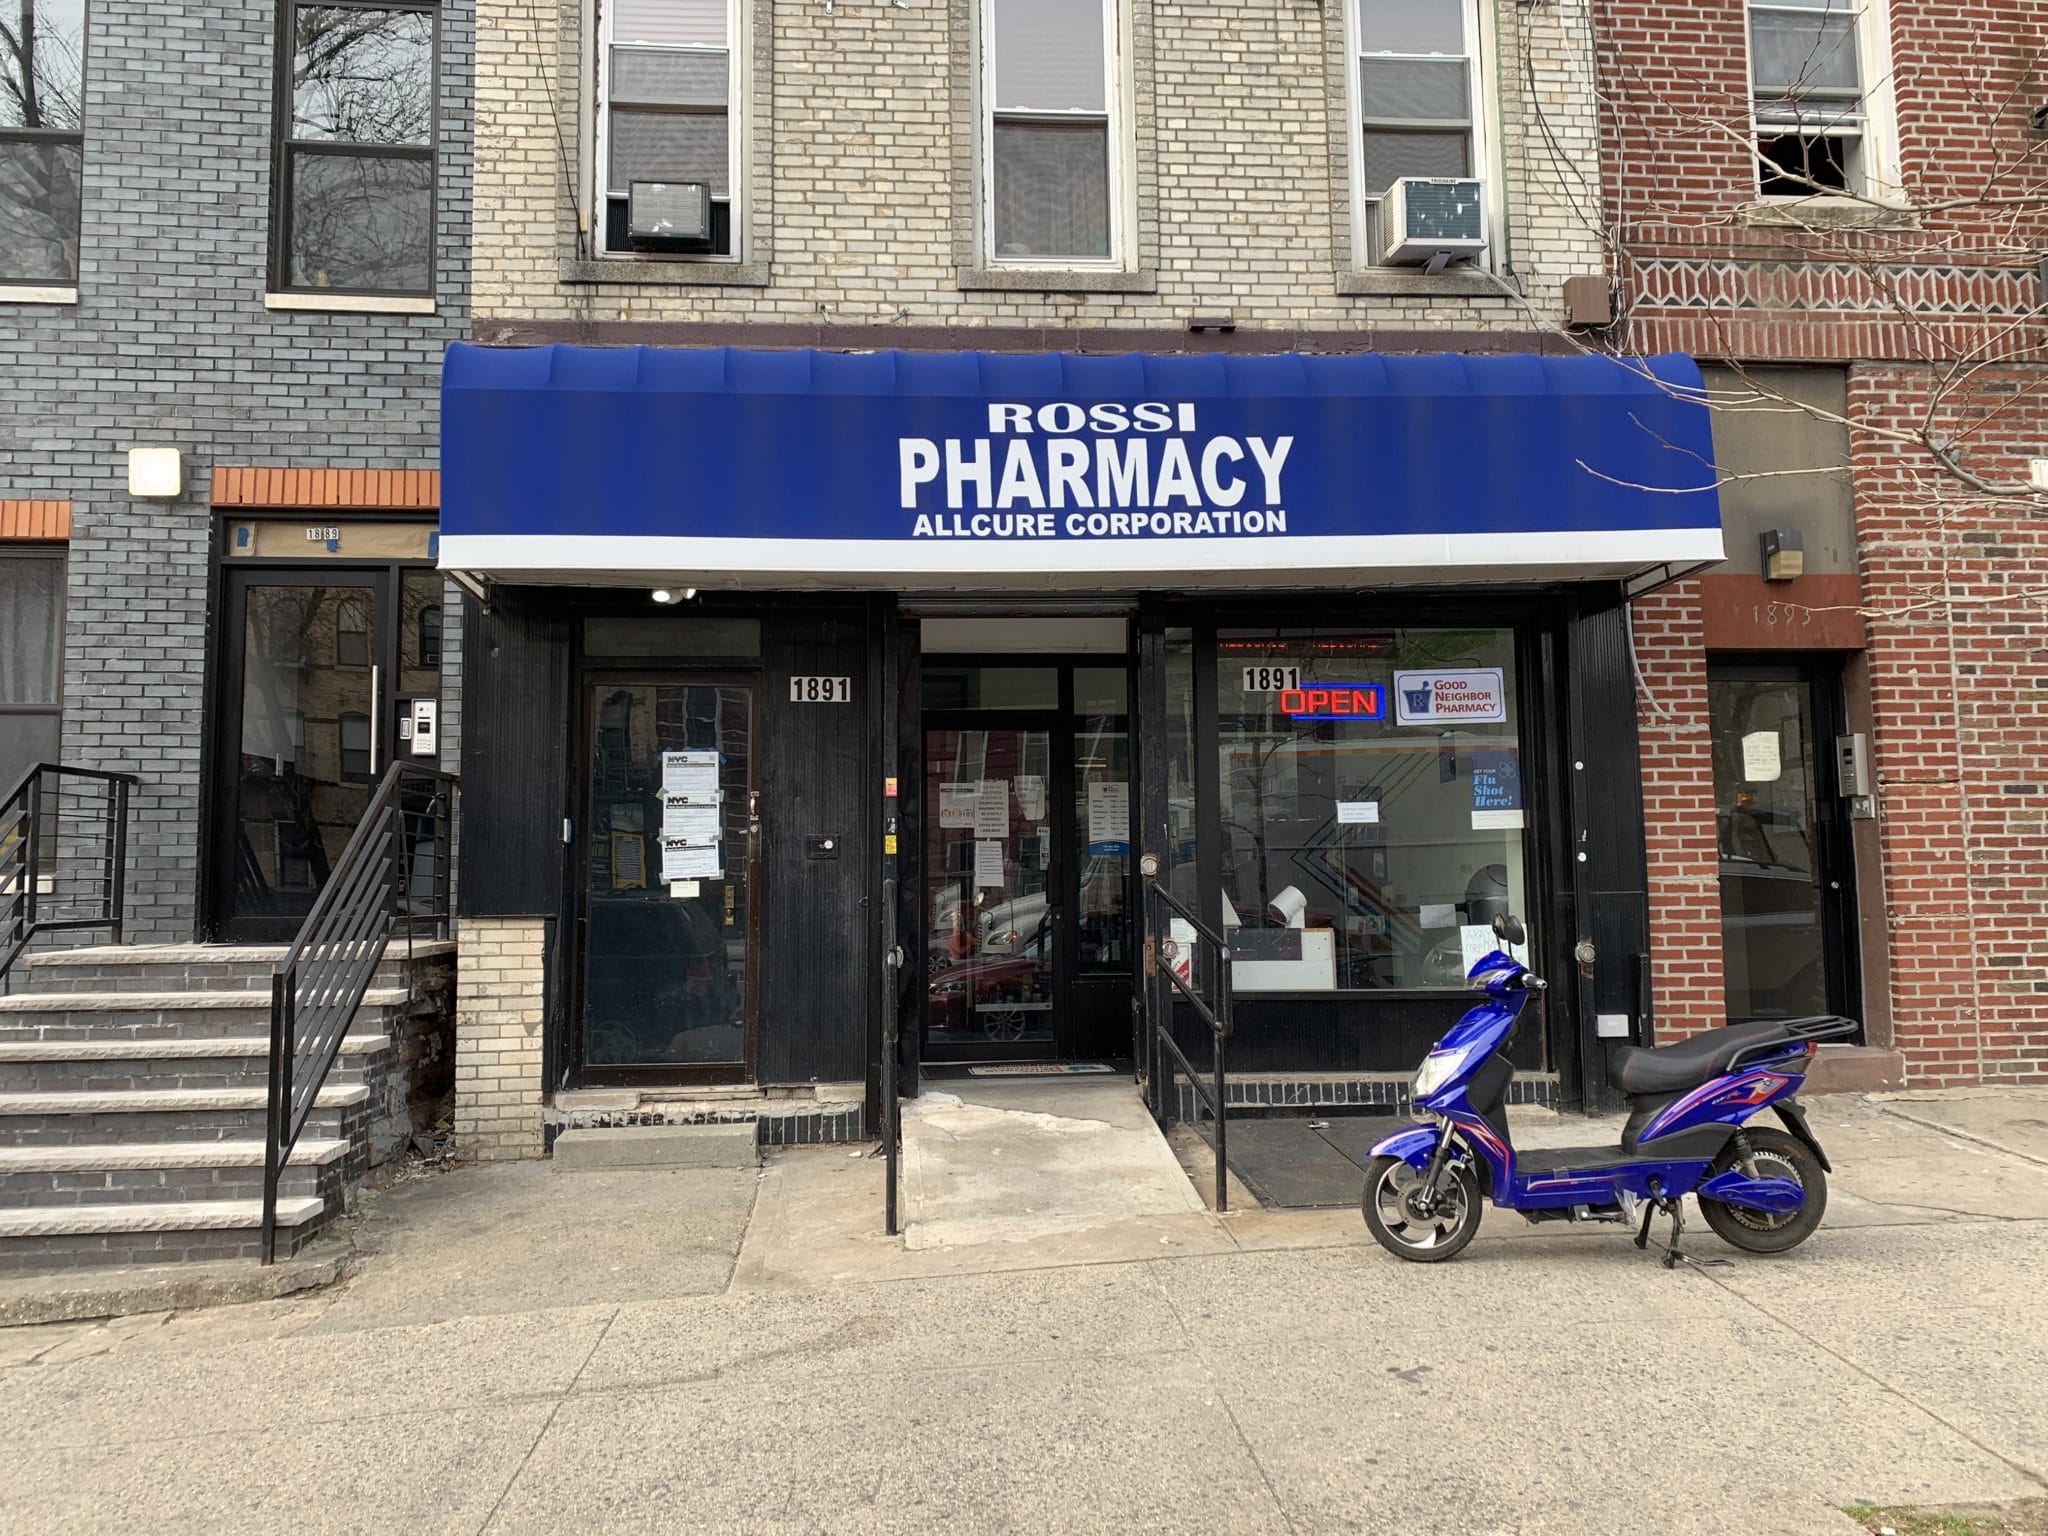 Rossi Pharmacy, East New York, Brooklyn. Photo by ConsumerMoo.com